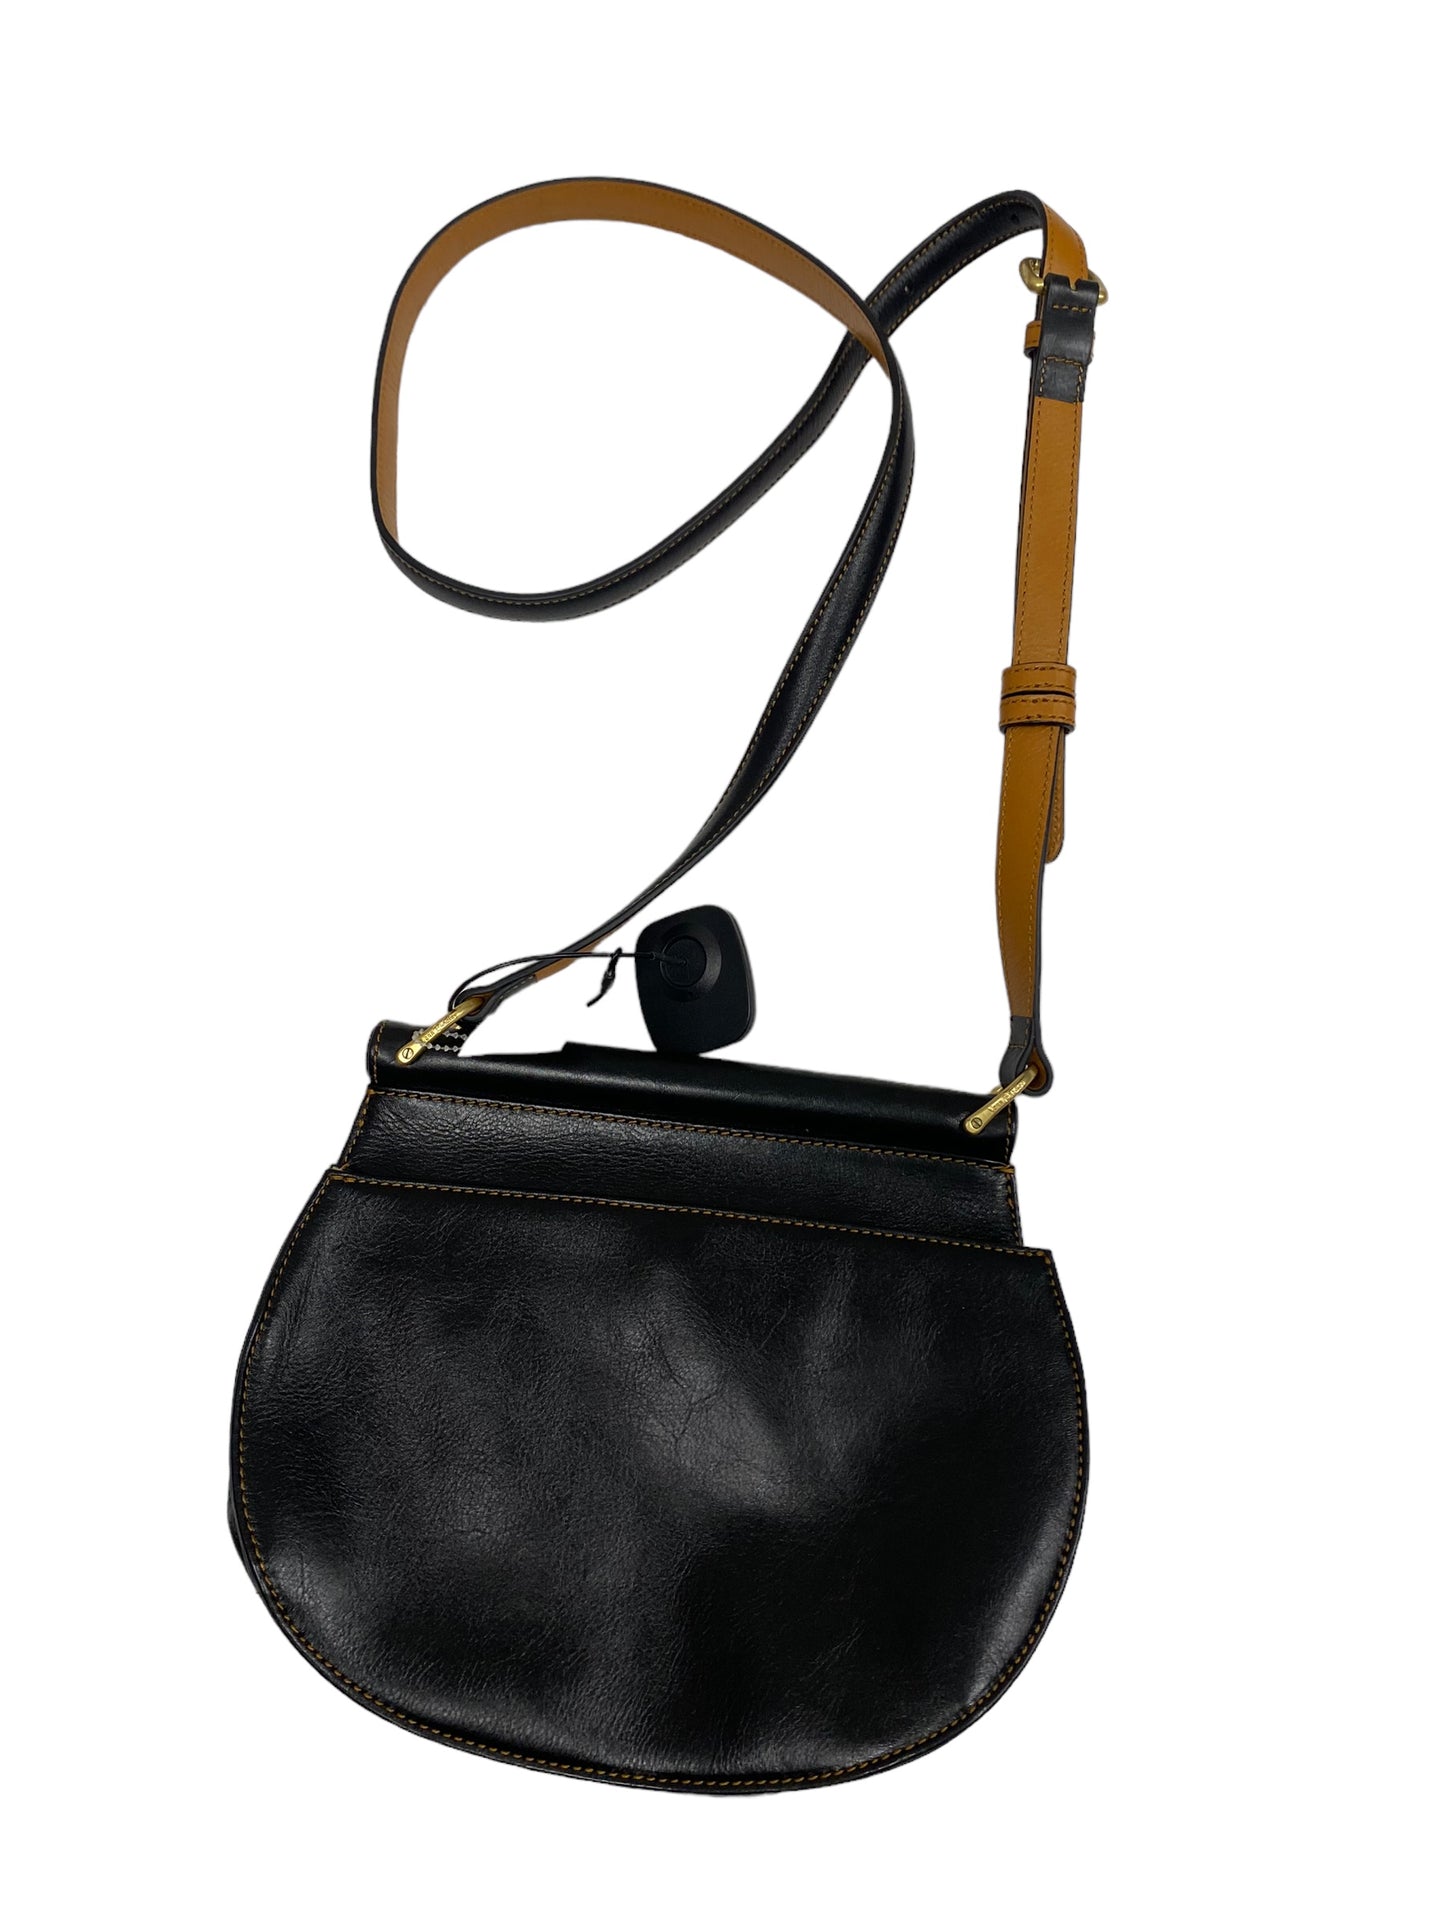 Handbag Leather By Vera Bradley  Size: Small